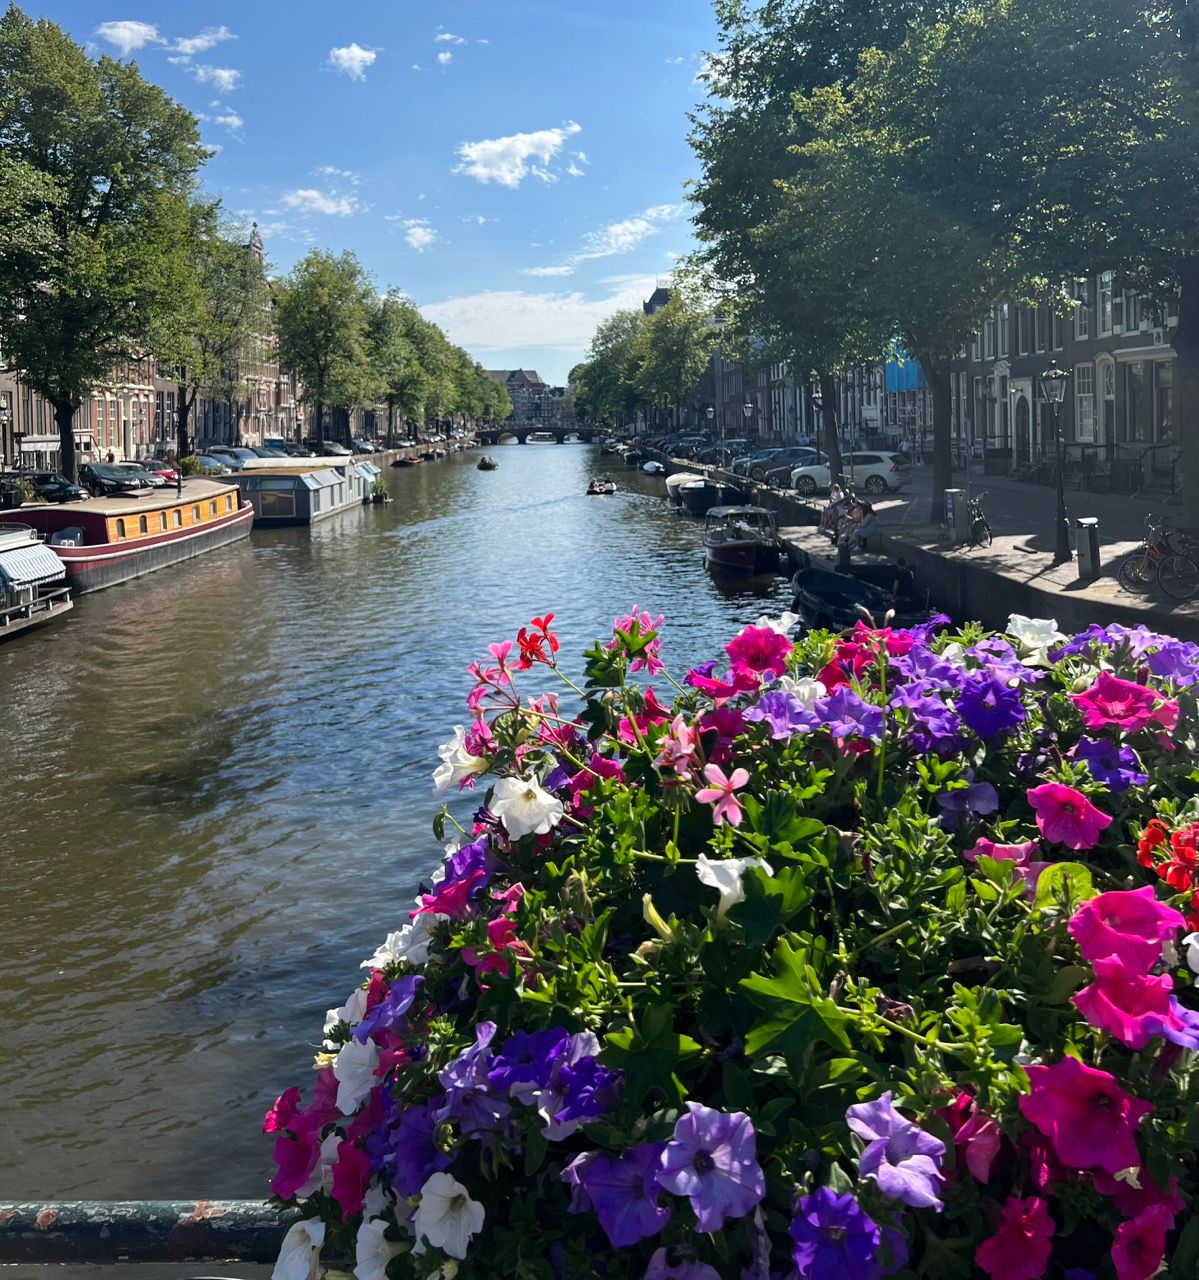 On my quick Amsterdam visit